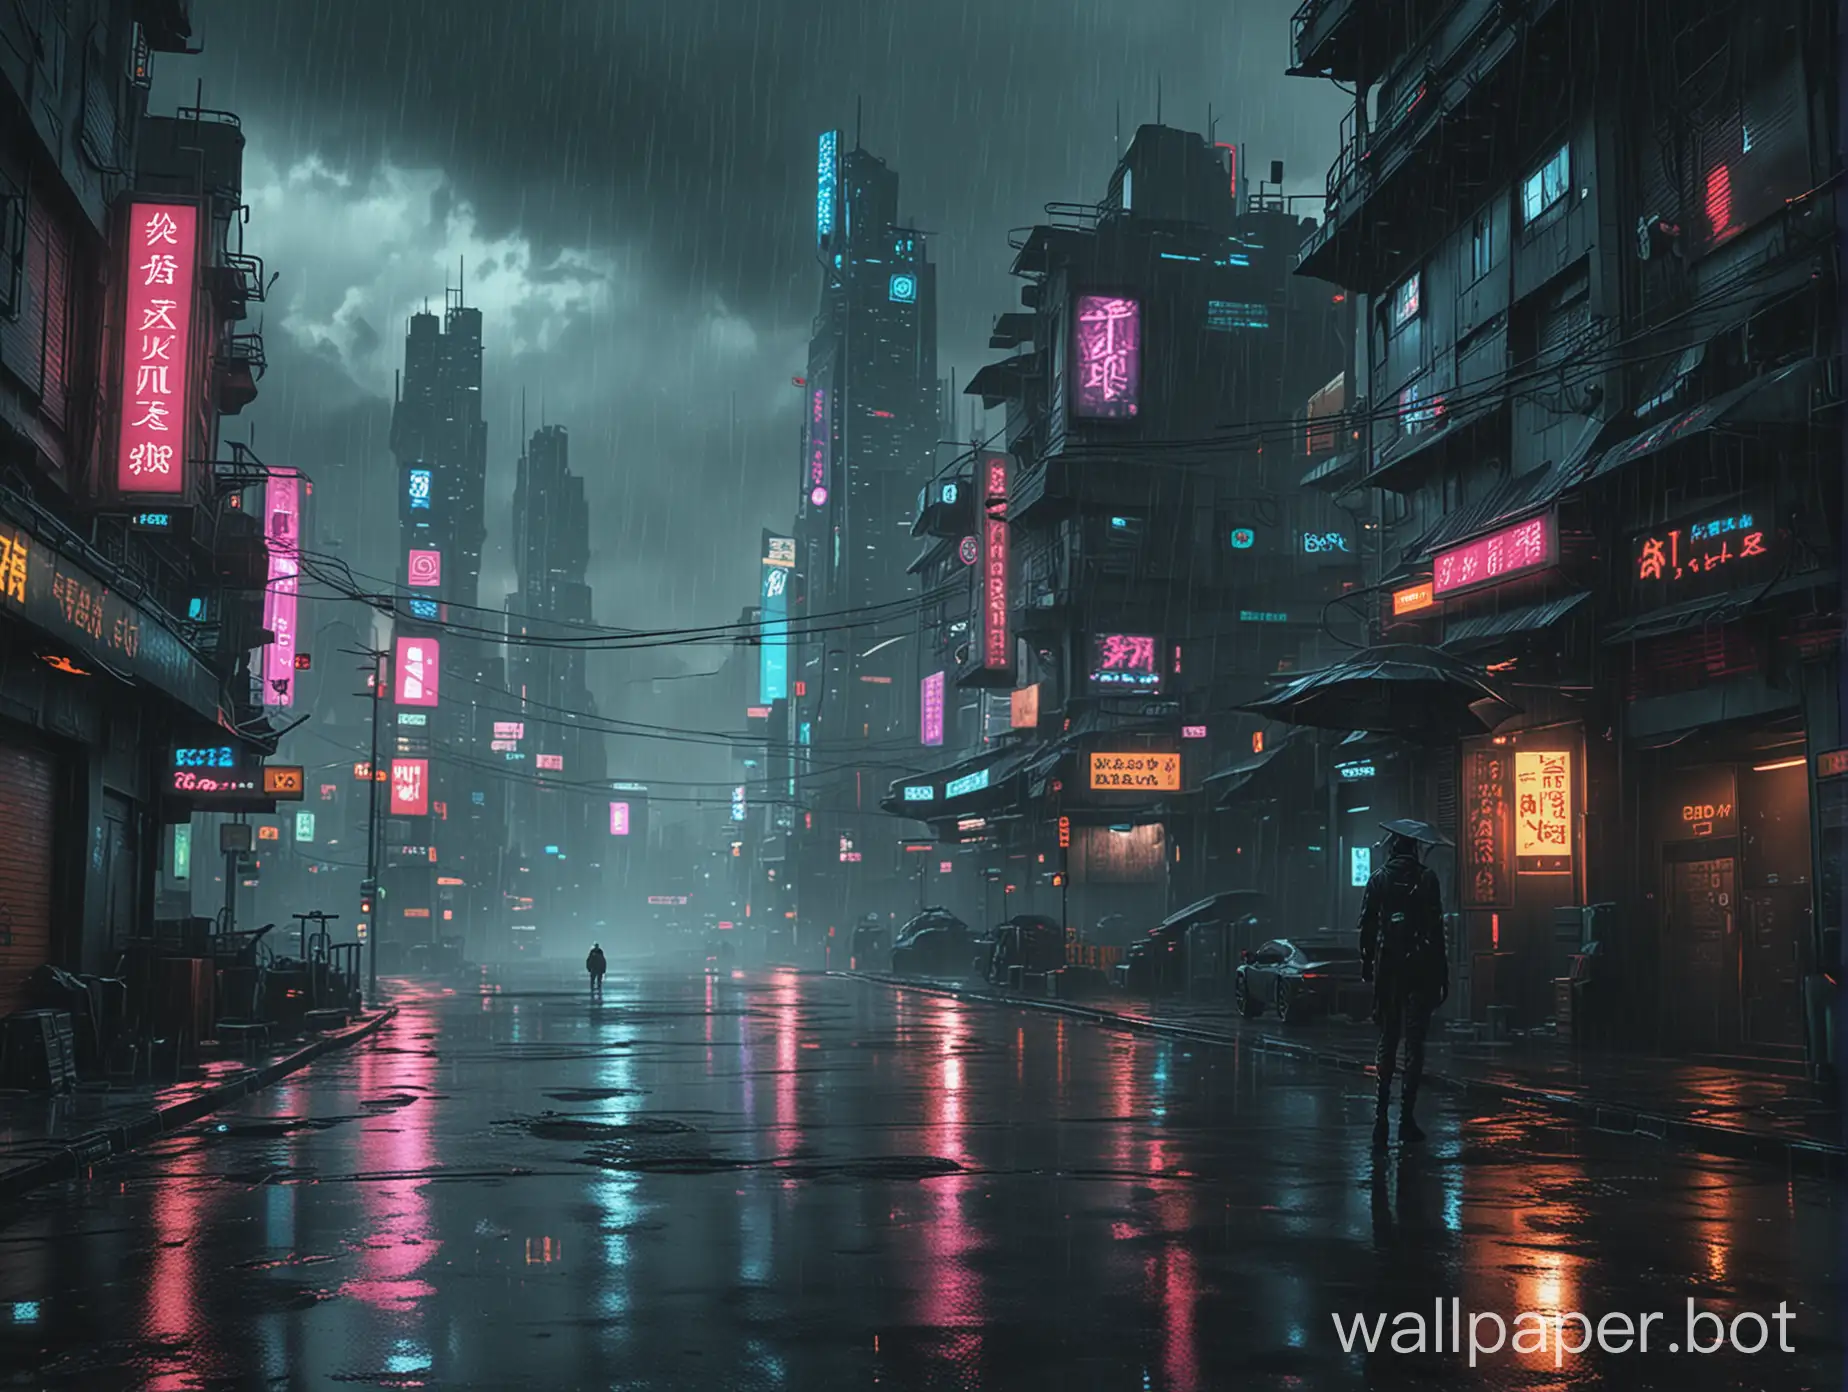 cyberpunk background with rain 1080p